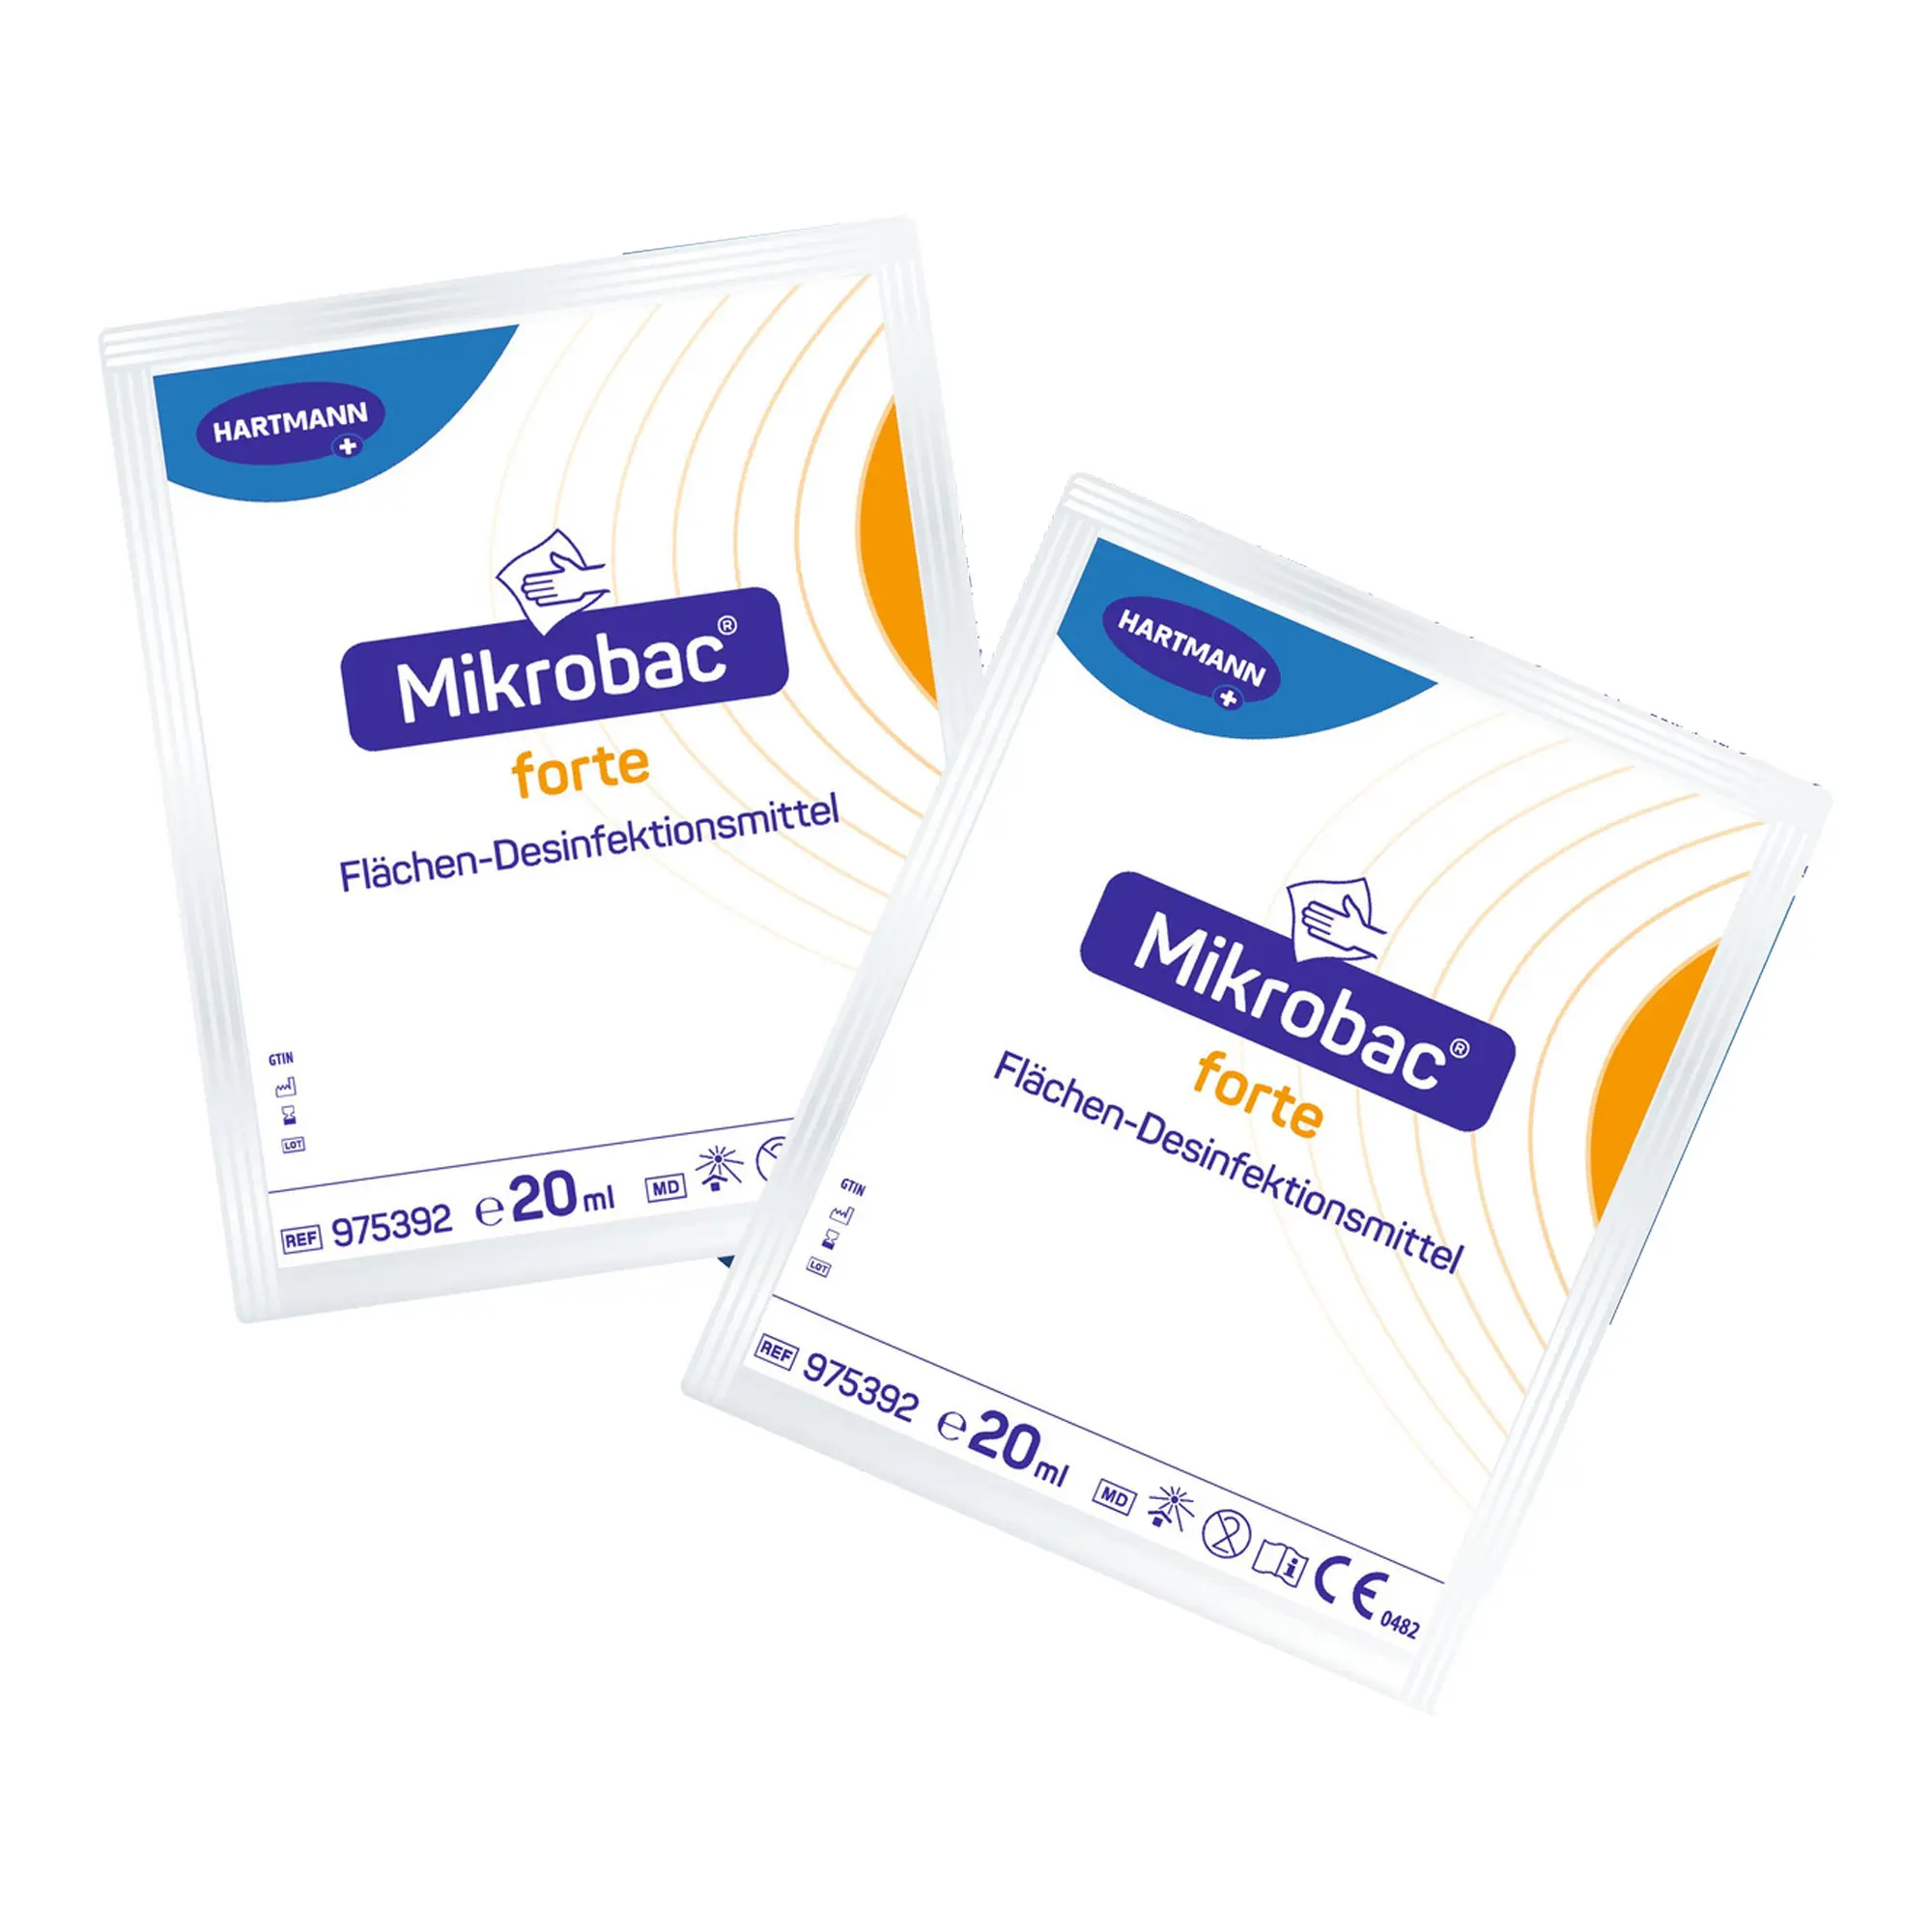 Bode Mikrobac forte aldehydfreies Desinfektionsmittel